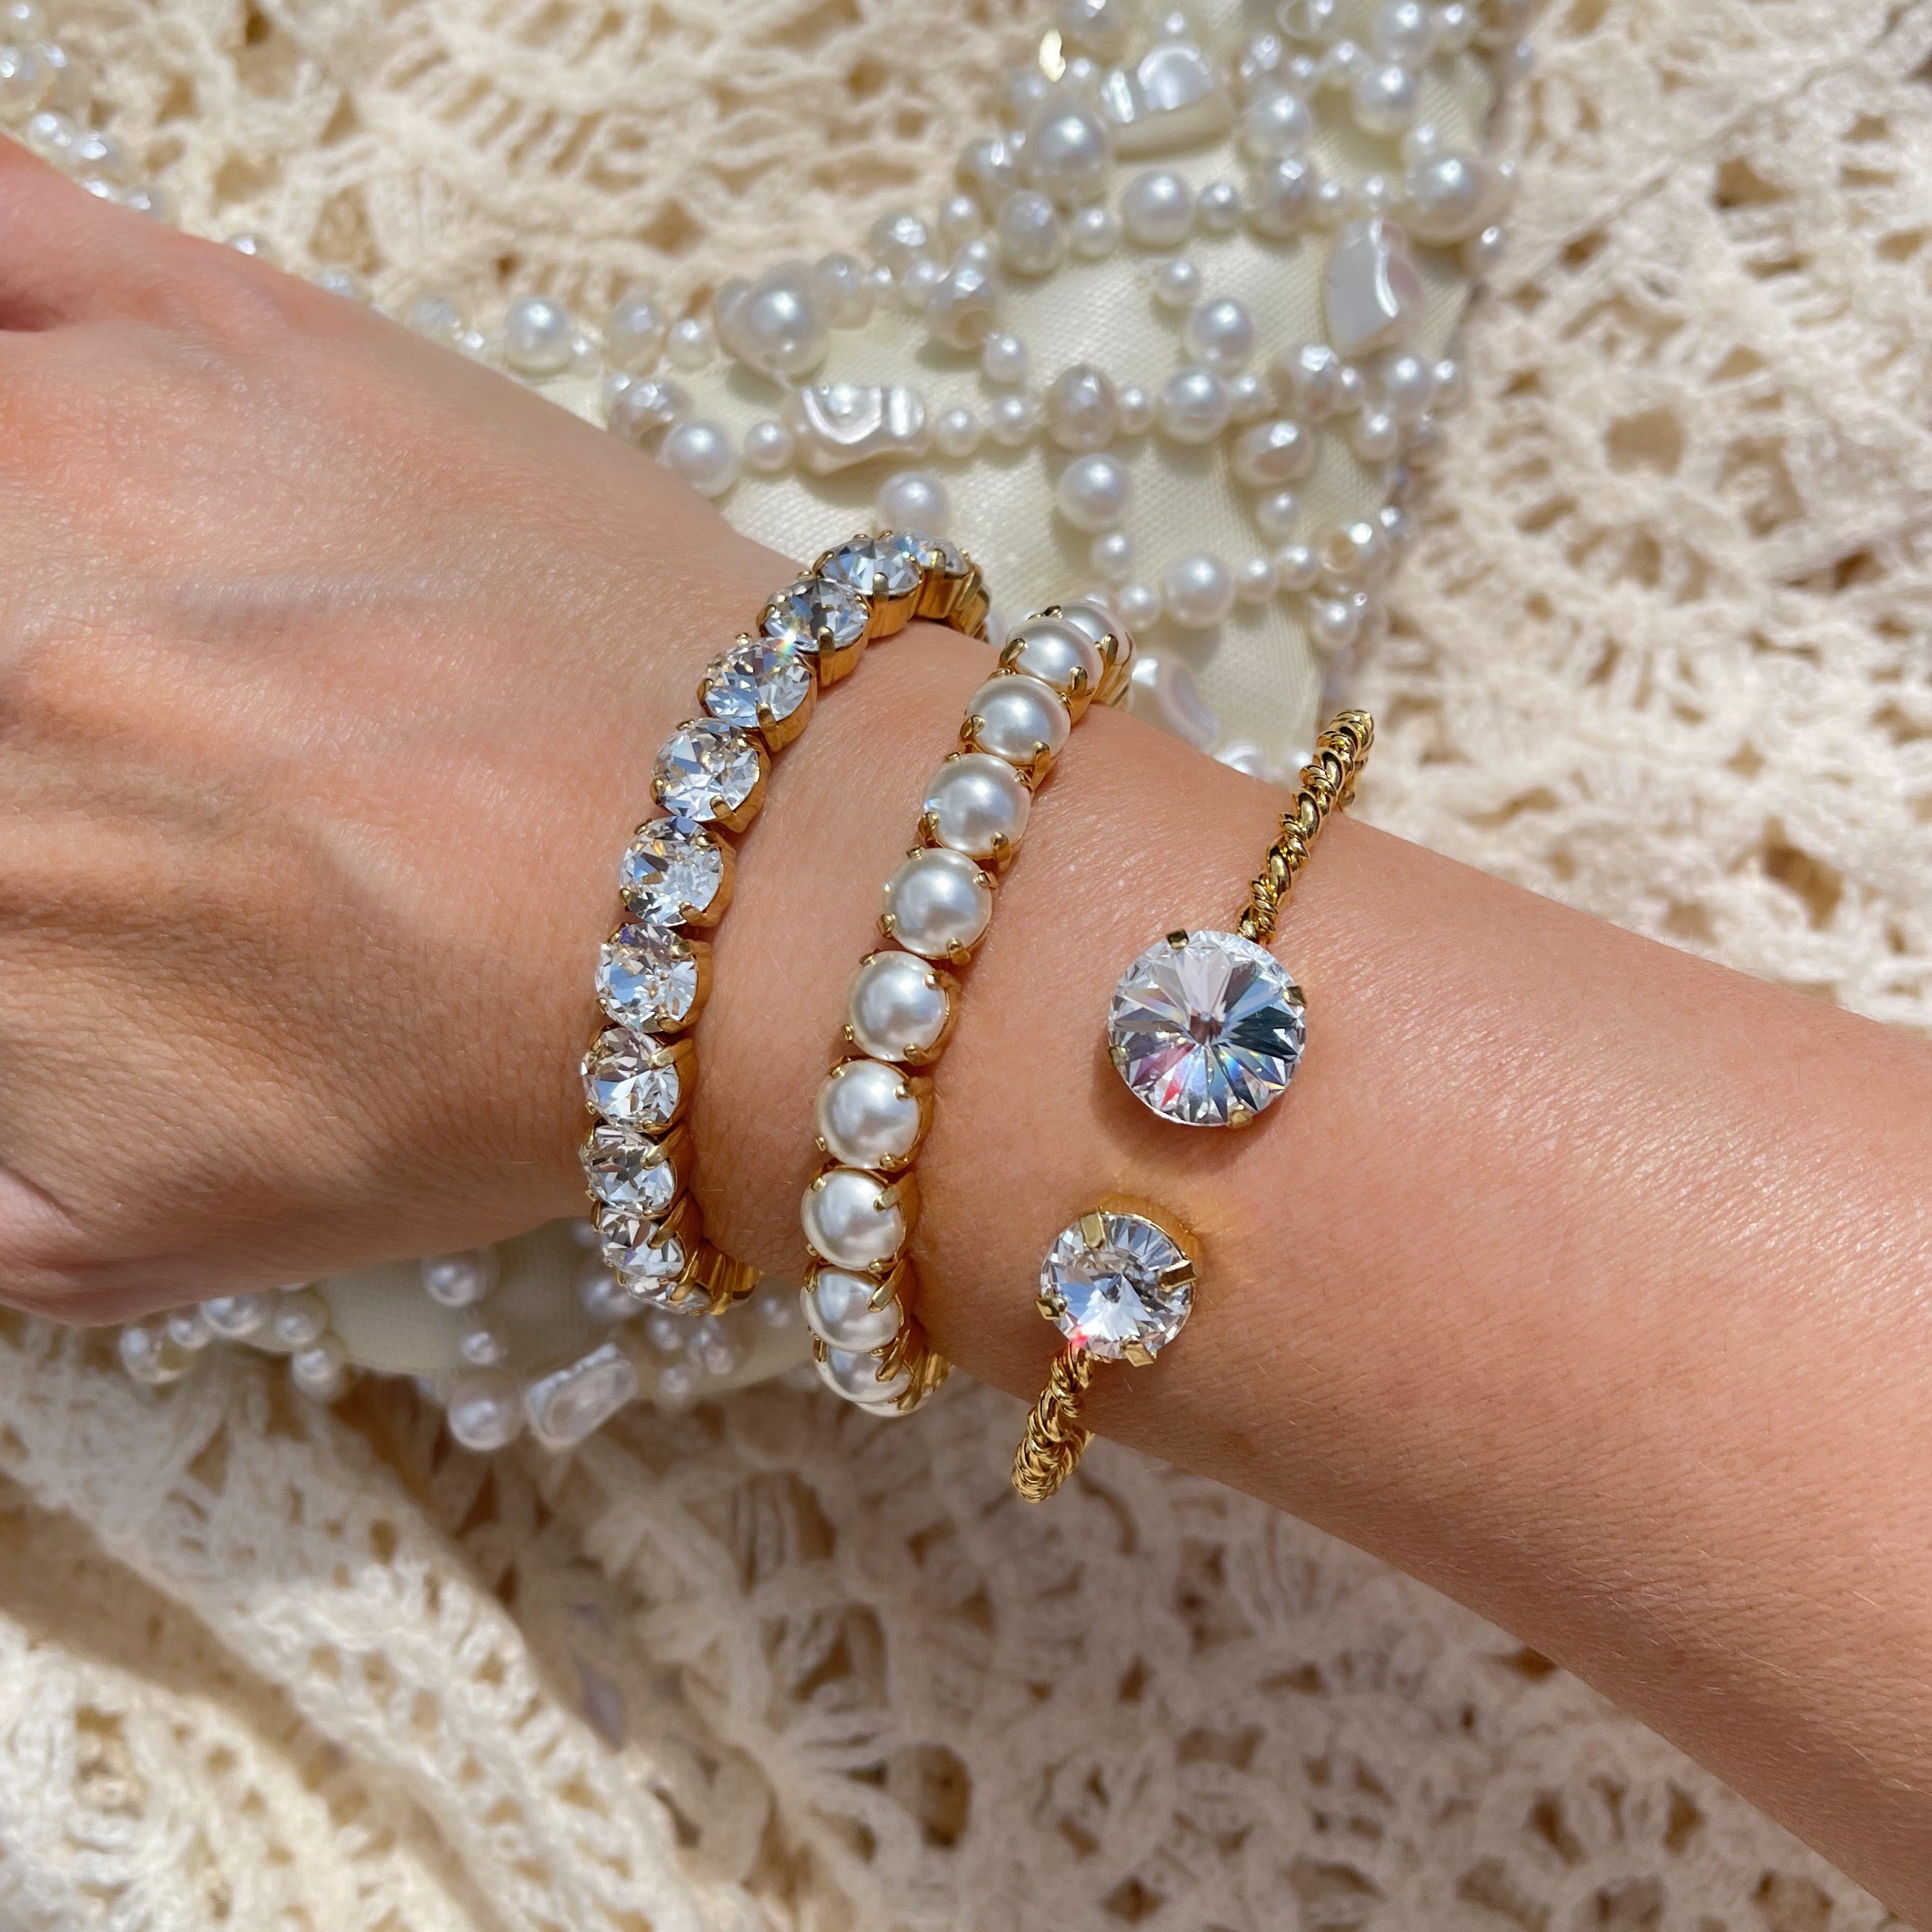 Tennis bracelet, stacking bracelet, boho bracelets, gemstone bracelets, swarovski tennis bracelet, crystal bracelet, gold cuff bracelet, wedding bracelet, going out bracelet